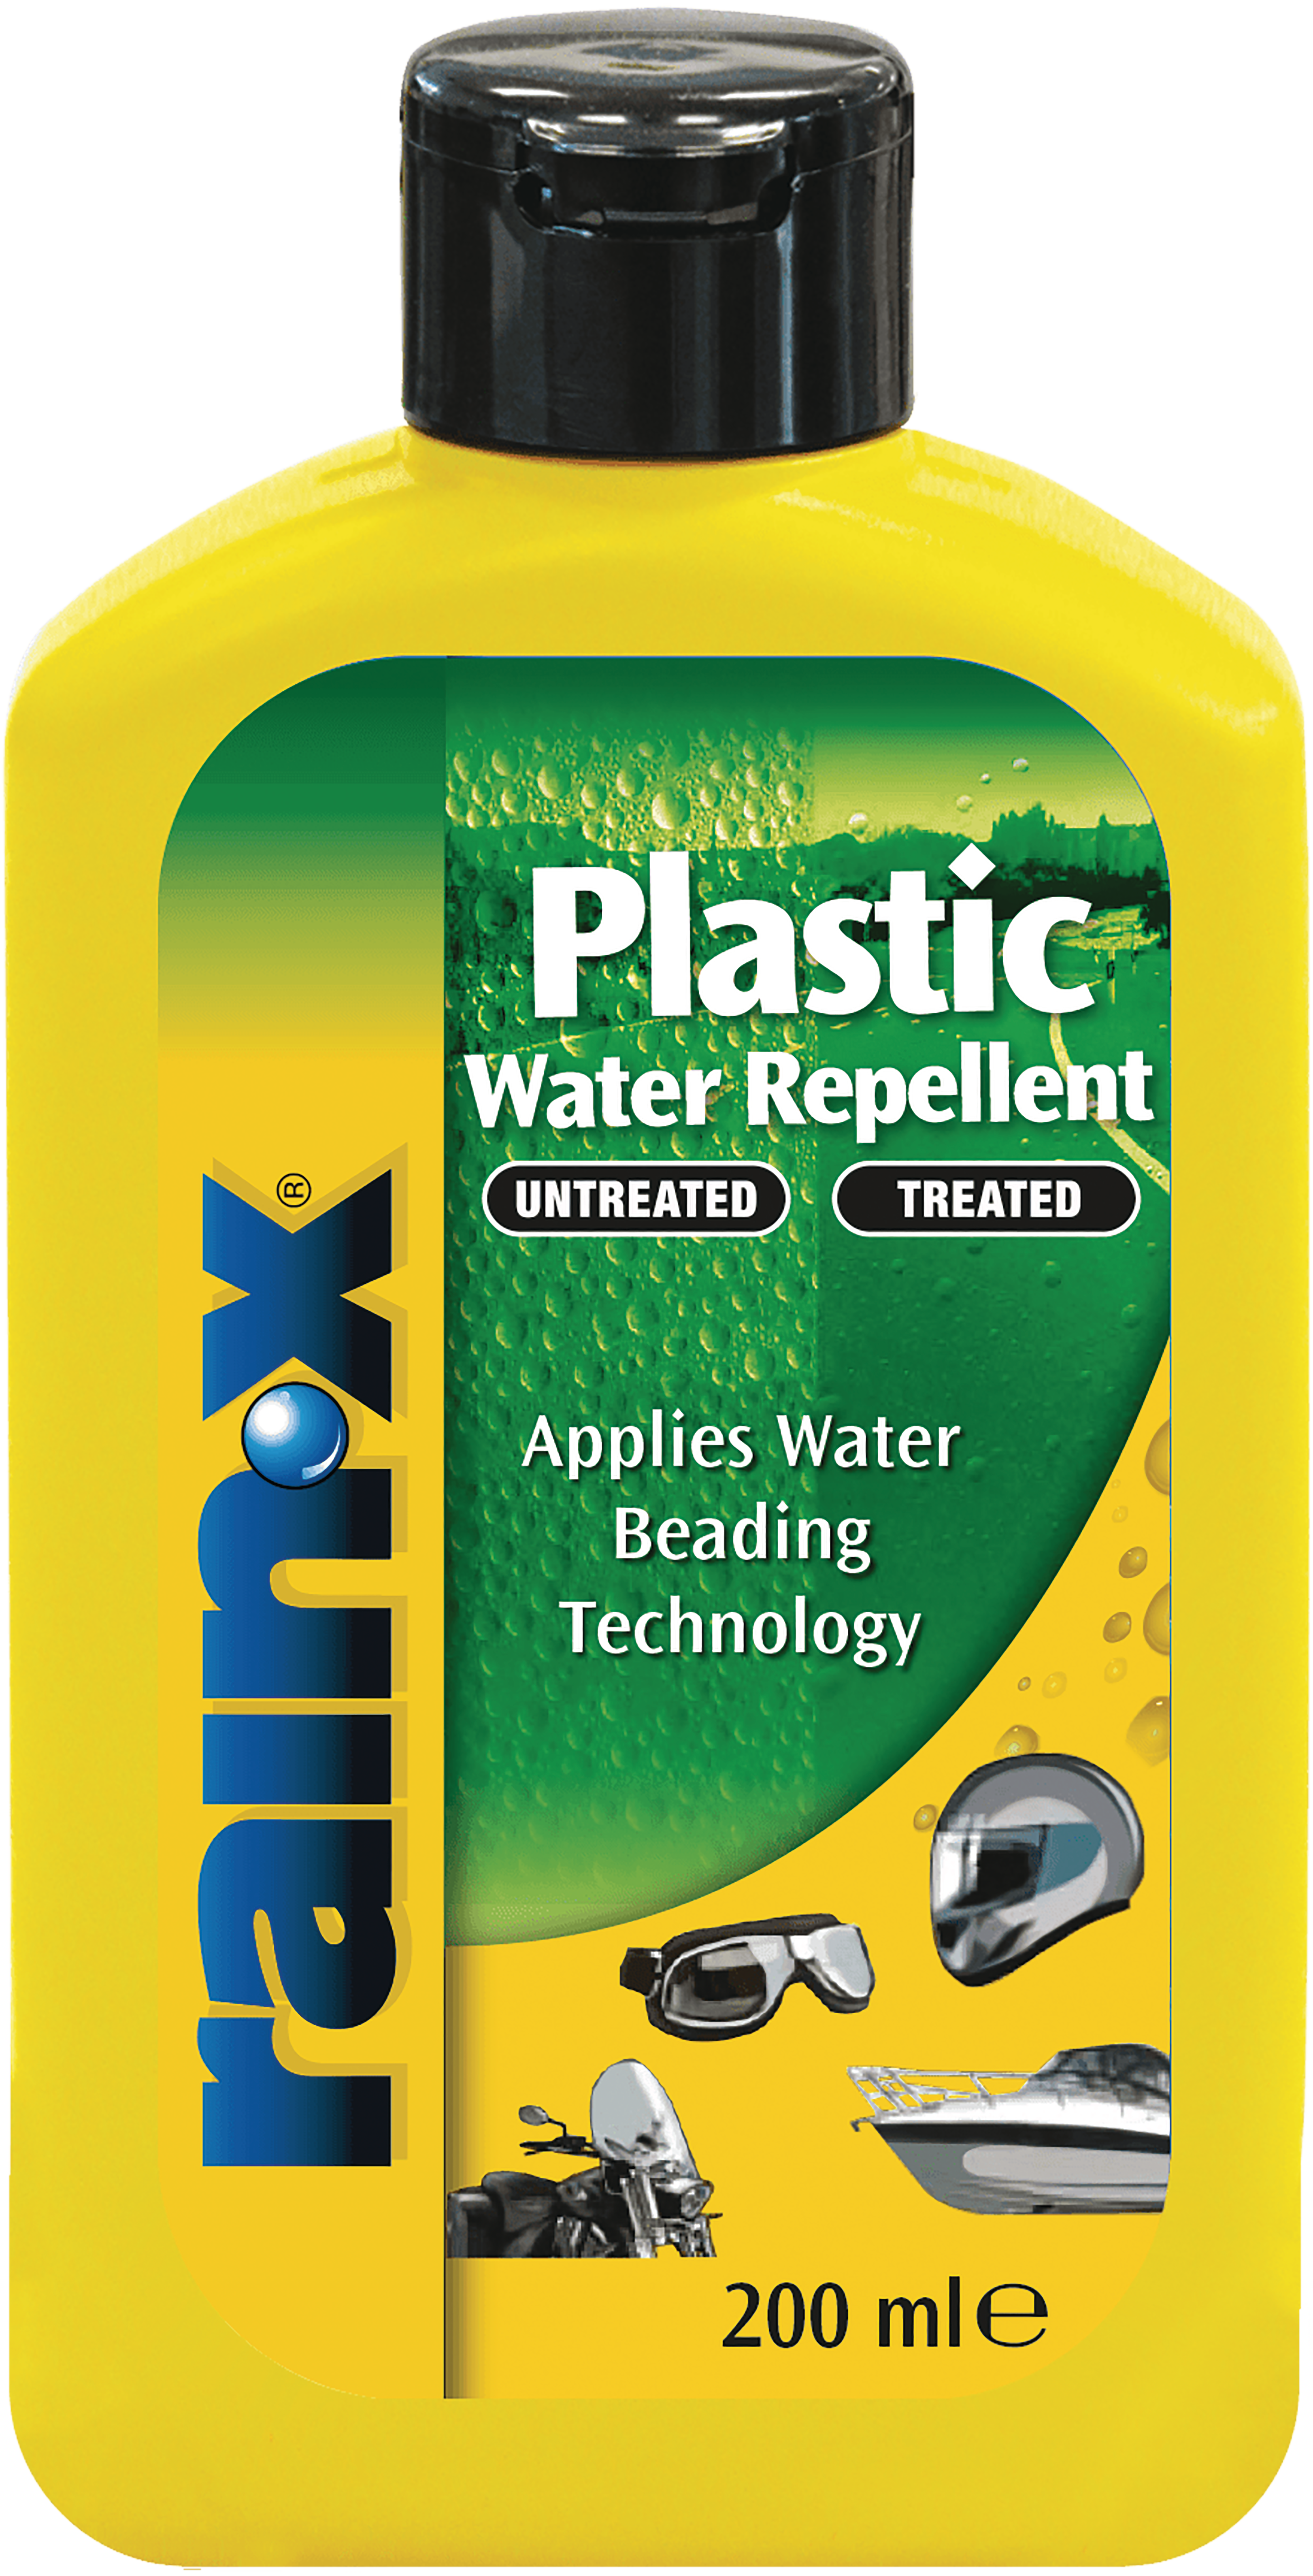 Rain & Water Repellent for Plastic